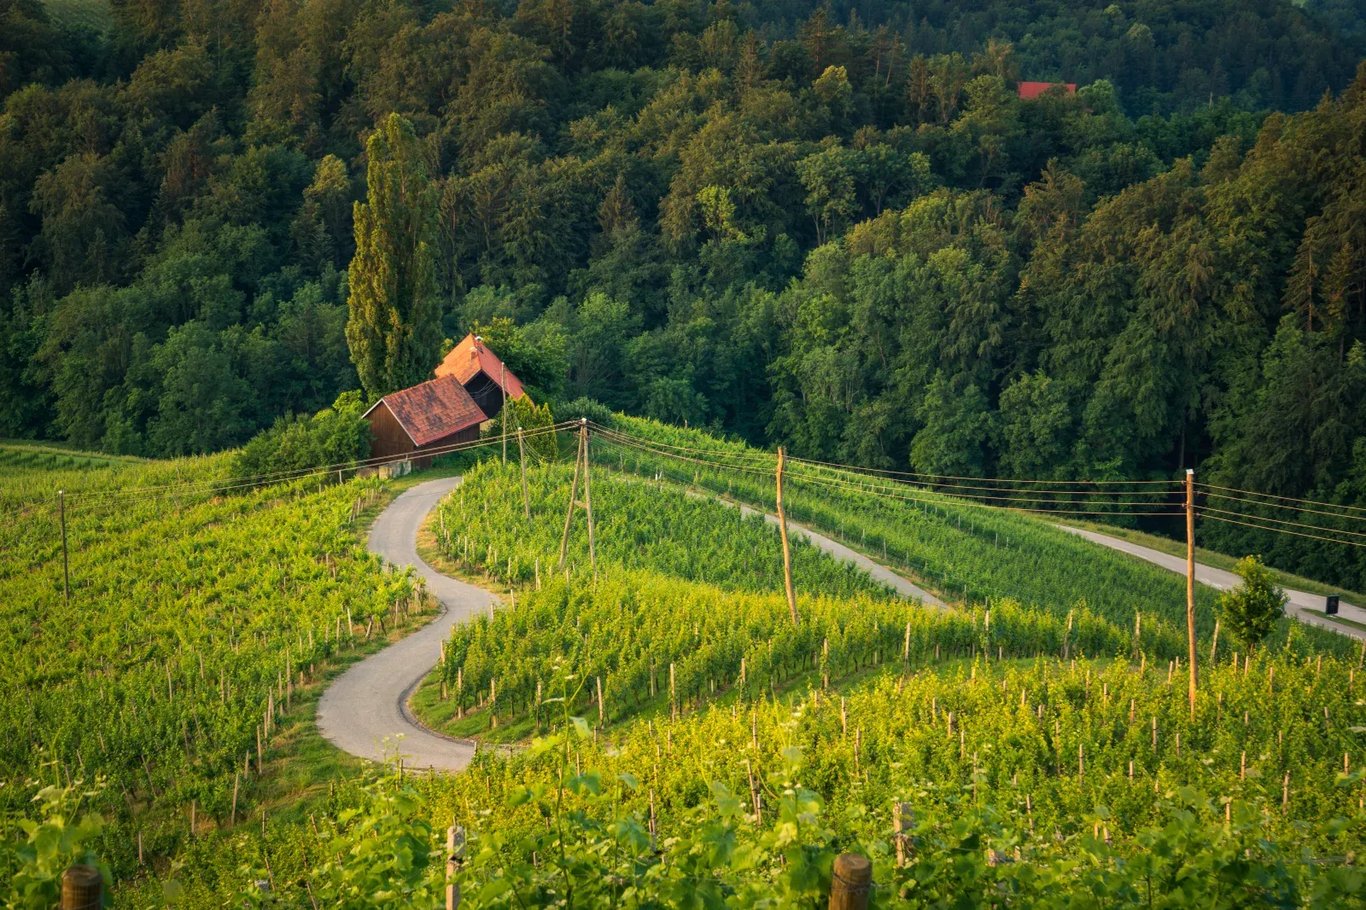 Spicnik, Slovenia (Guide) - The Heart-shaped Road